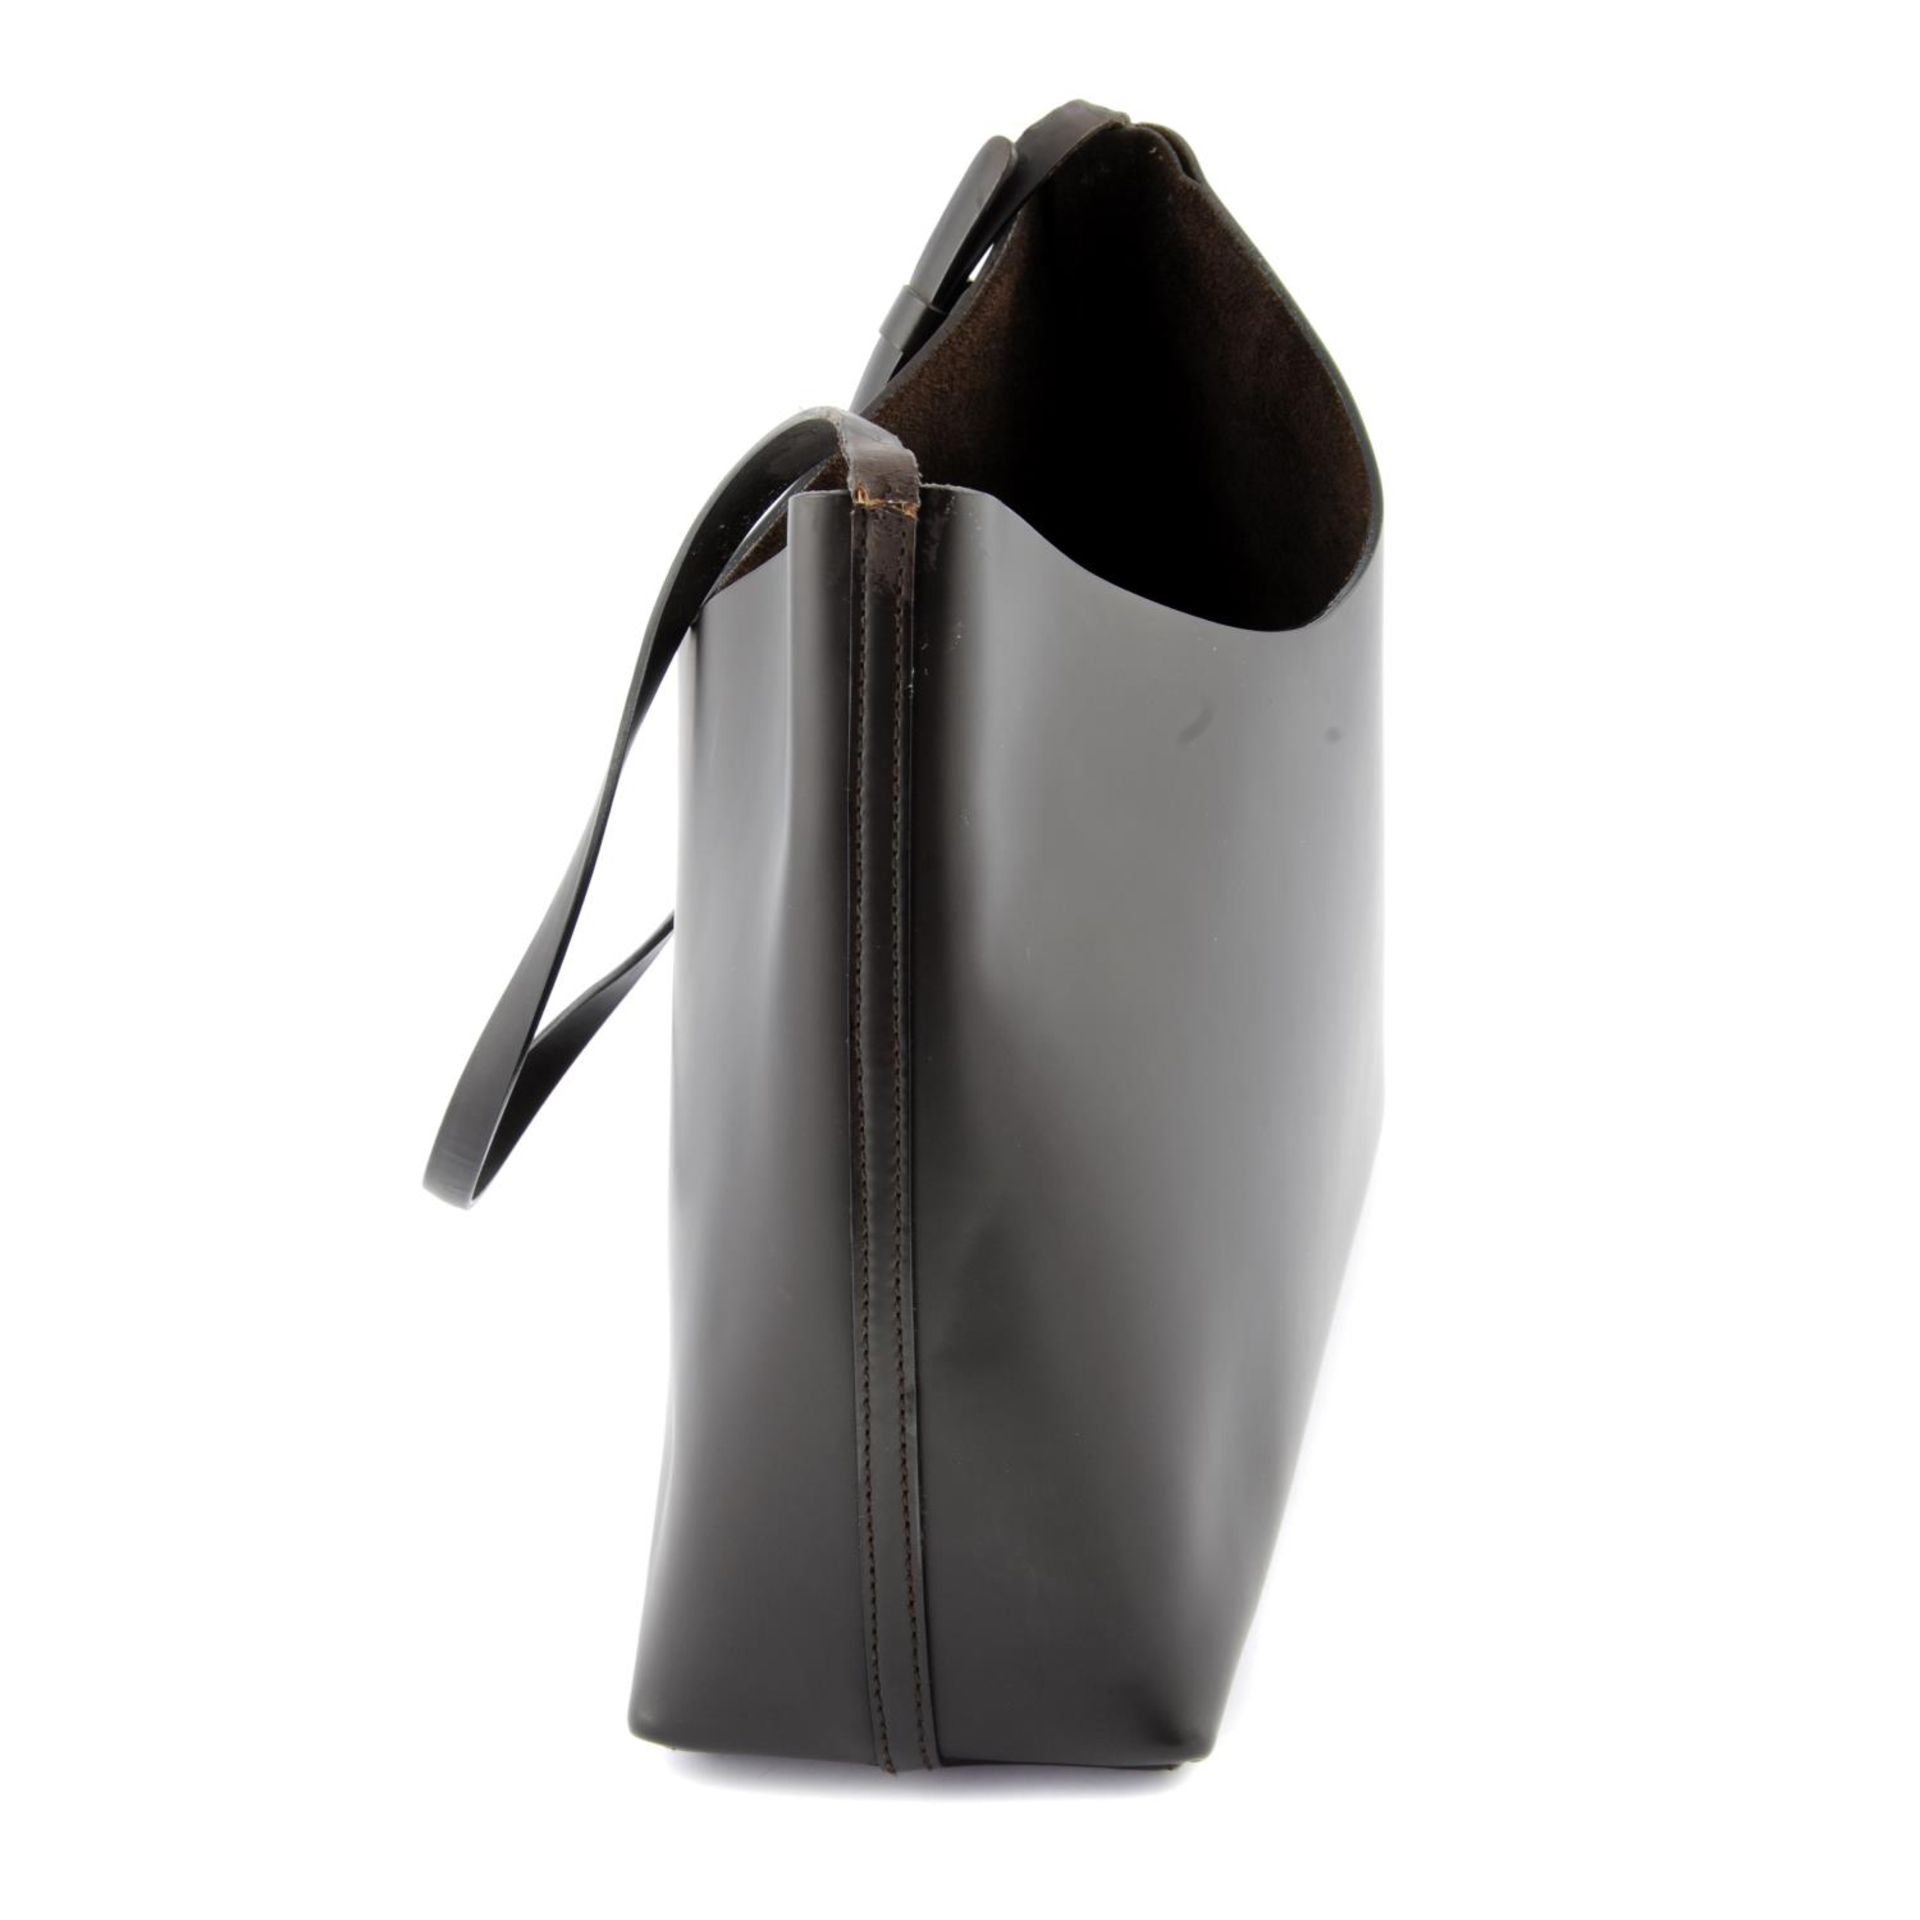 GUCCI - a brown leather handbag. - Image 3 of 5